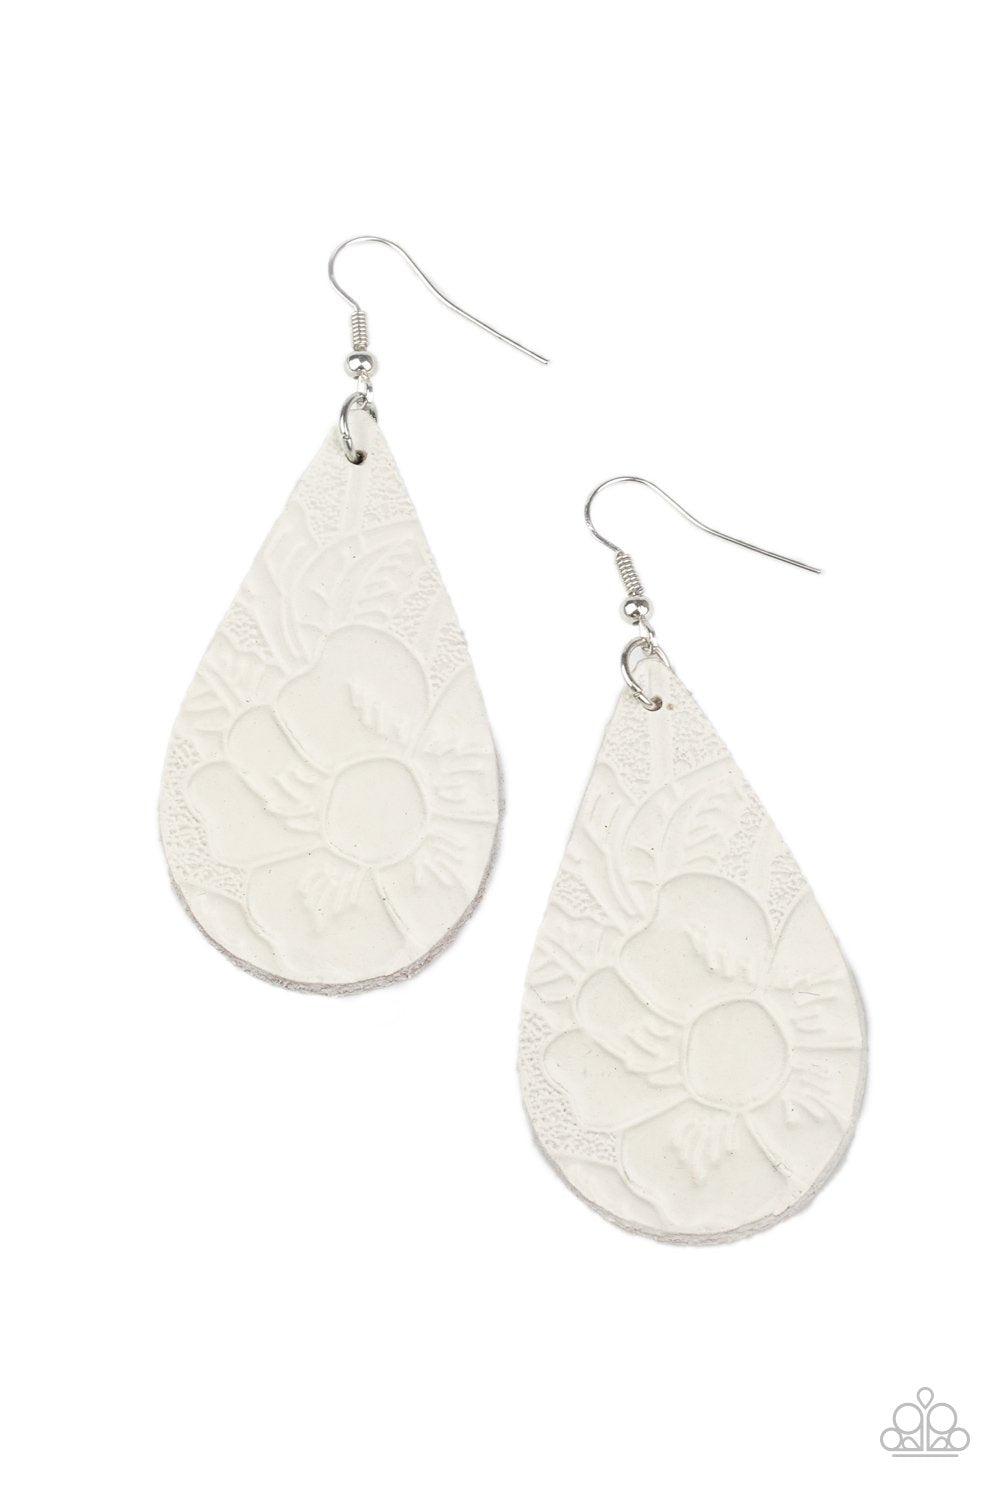 Beach Garden White Leather Teardrop Earrings - Paparazzi Accessories - lightbox -CarasShop.com - $5 Jewelry by Cara Jewels